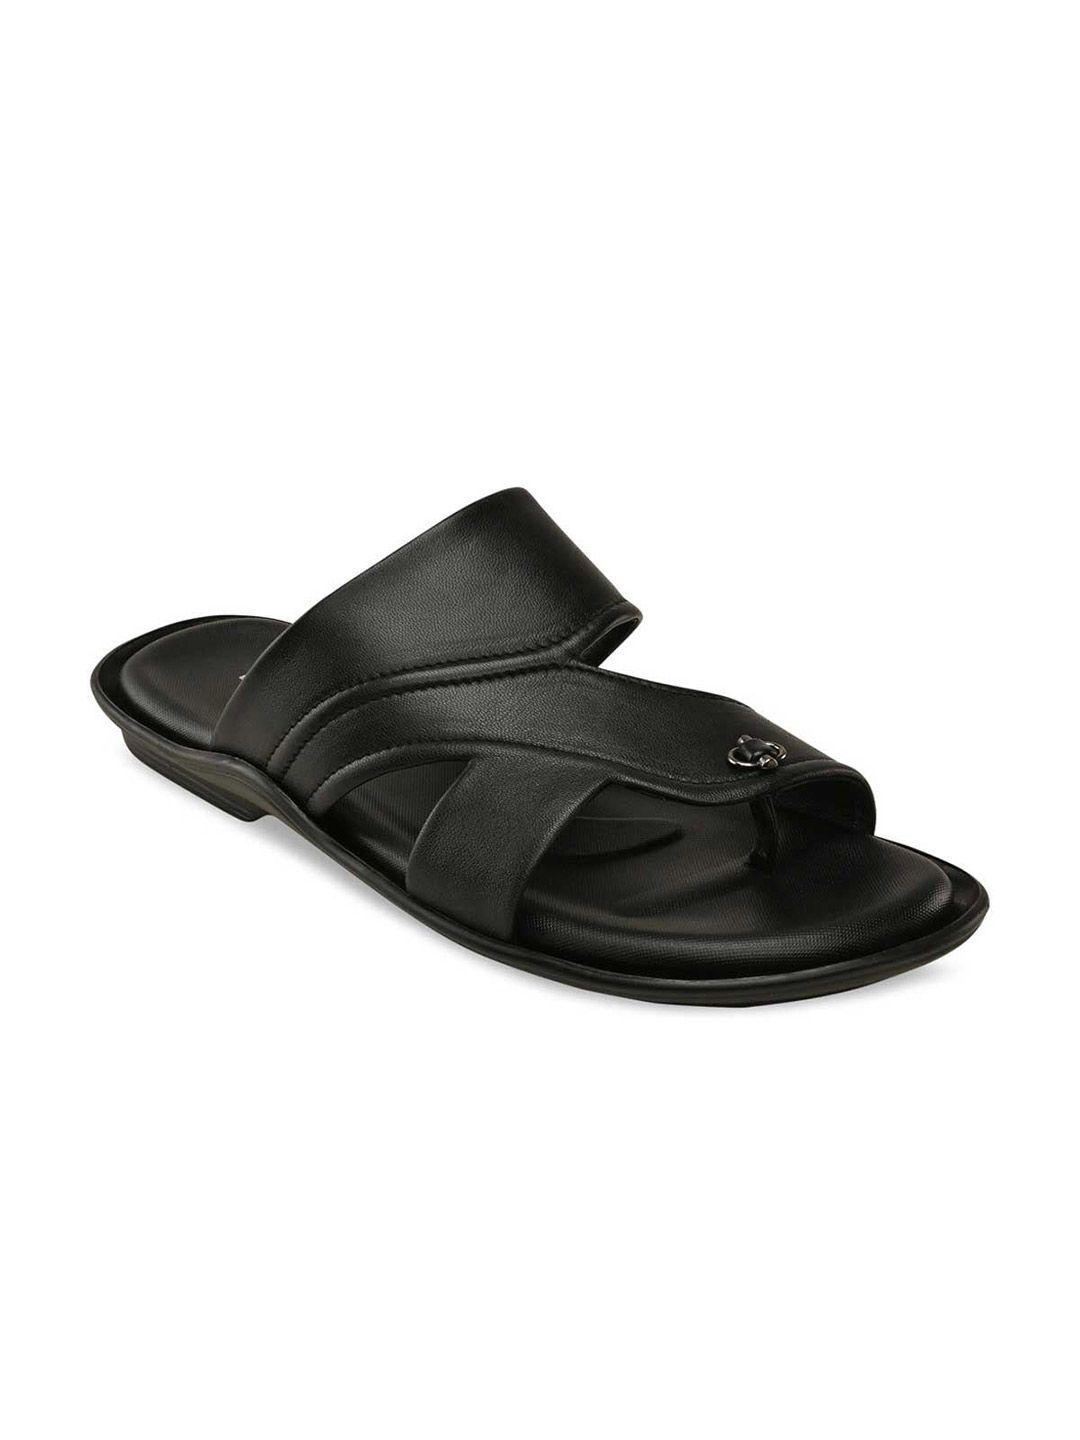 Regal Men Black Leather Comfort Sandals